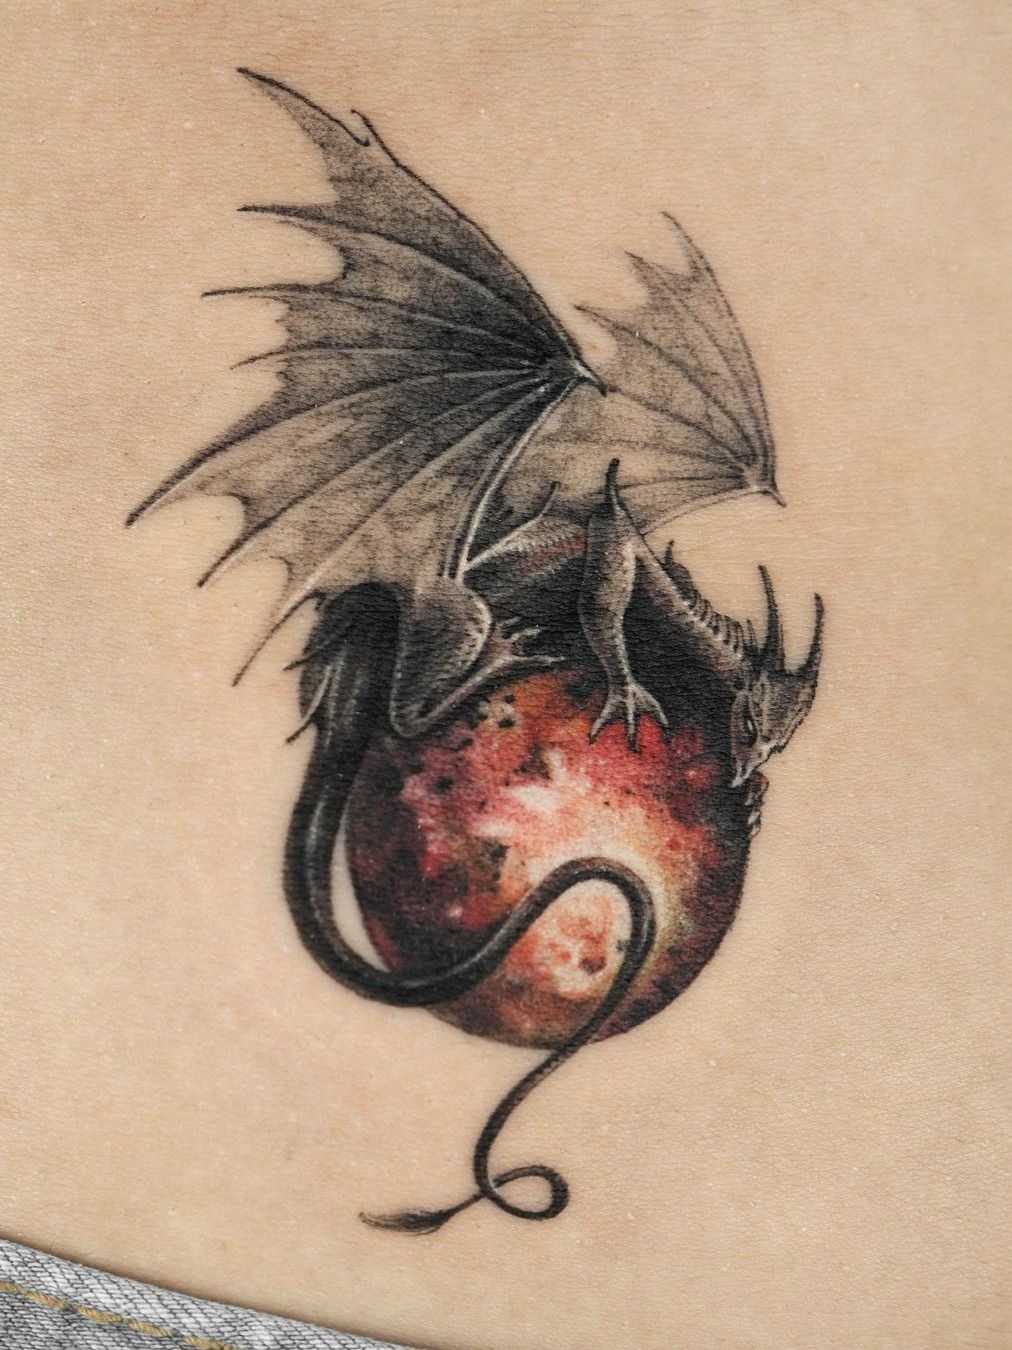 dragon tattoos - Playground